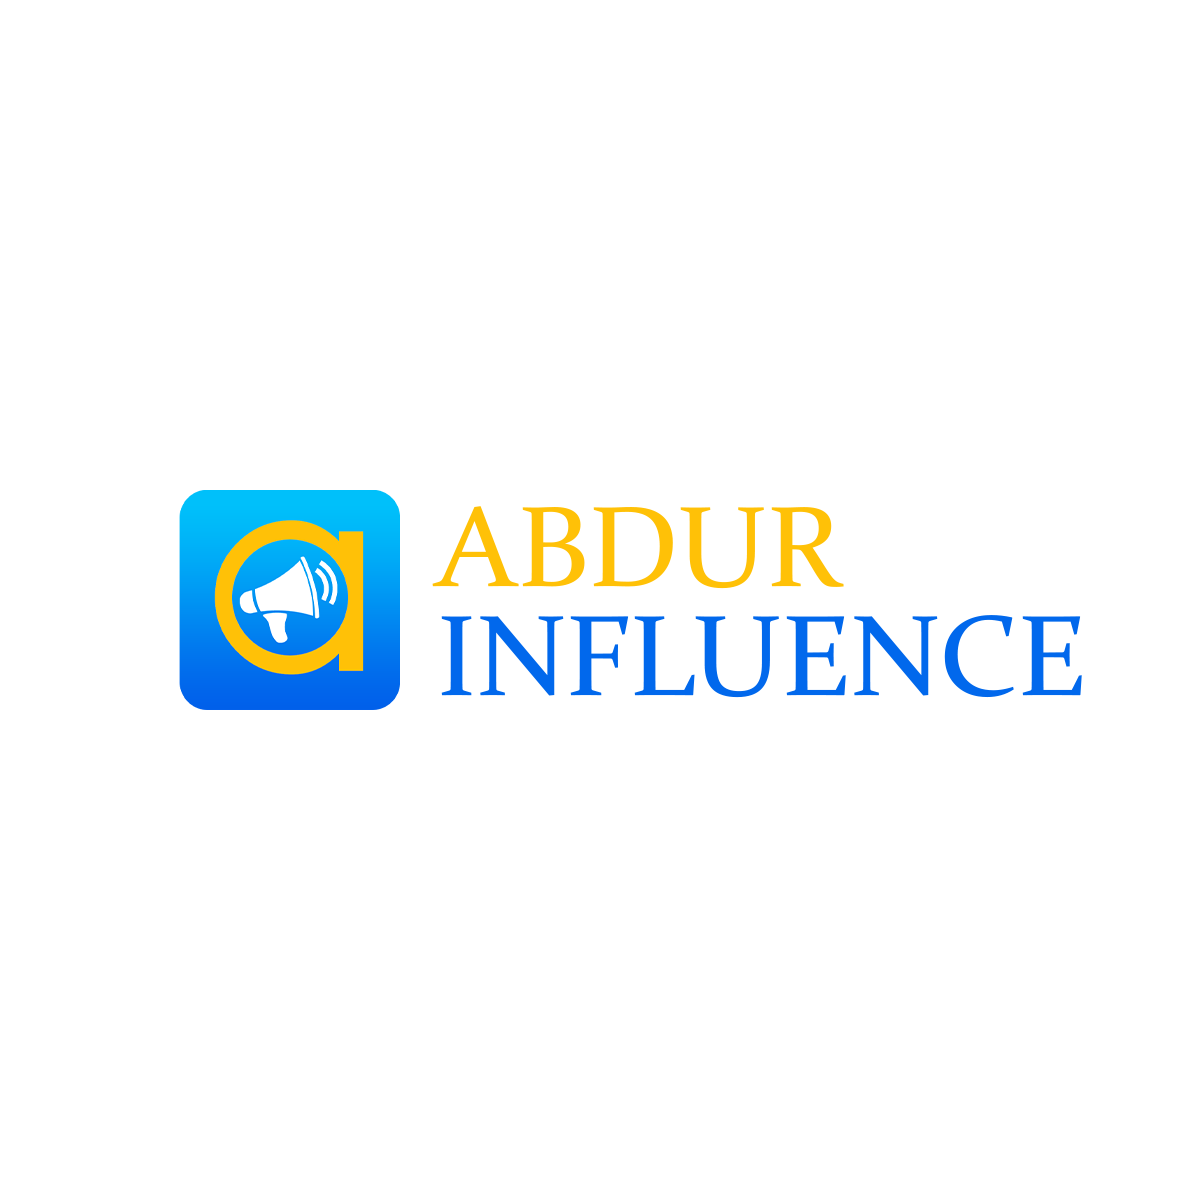 Abdur Influence